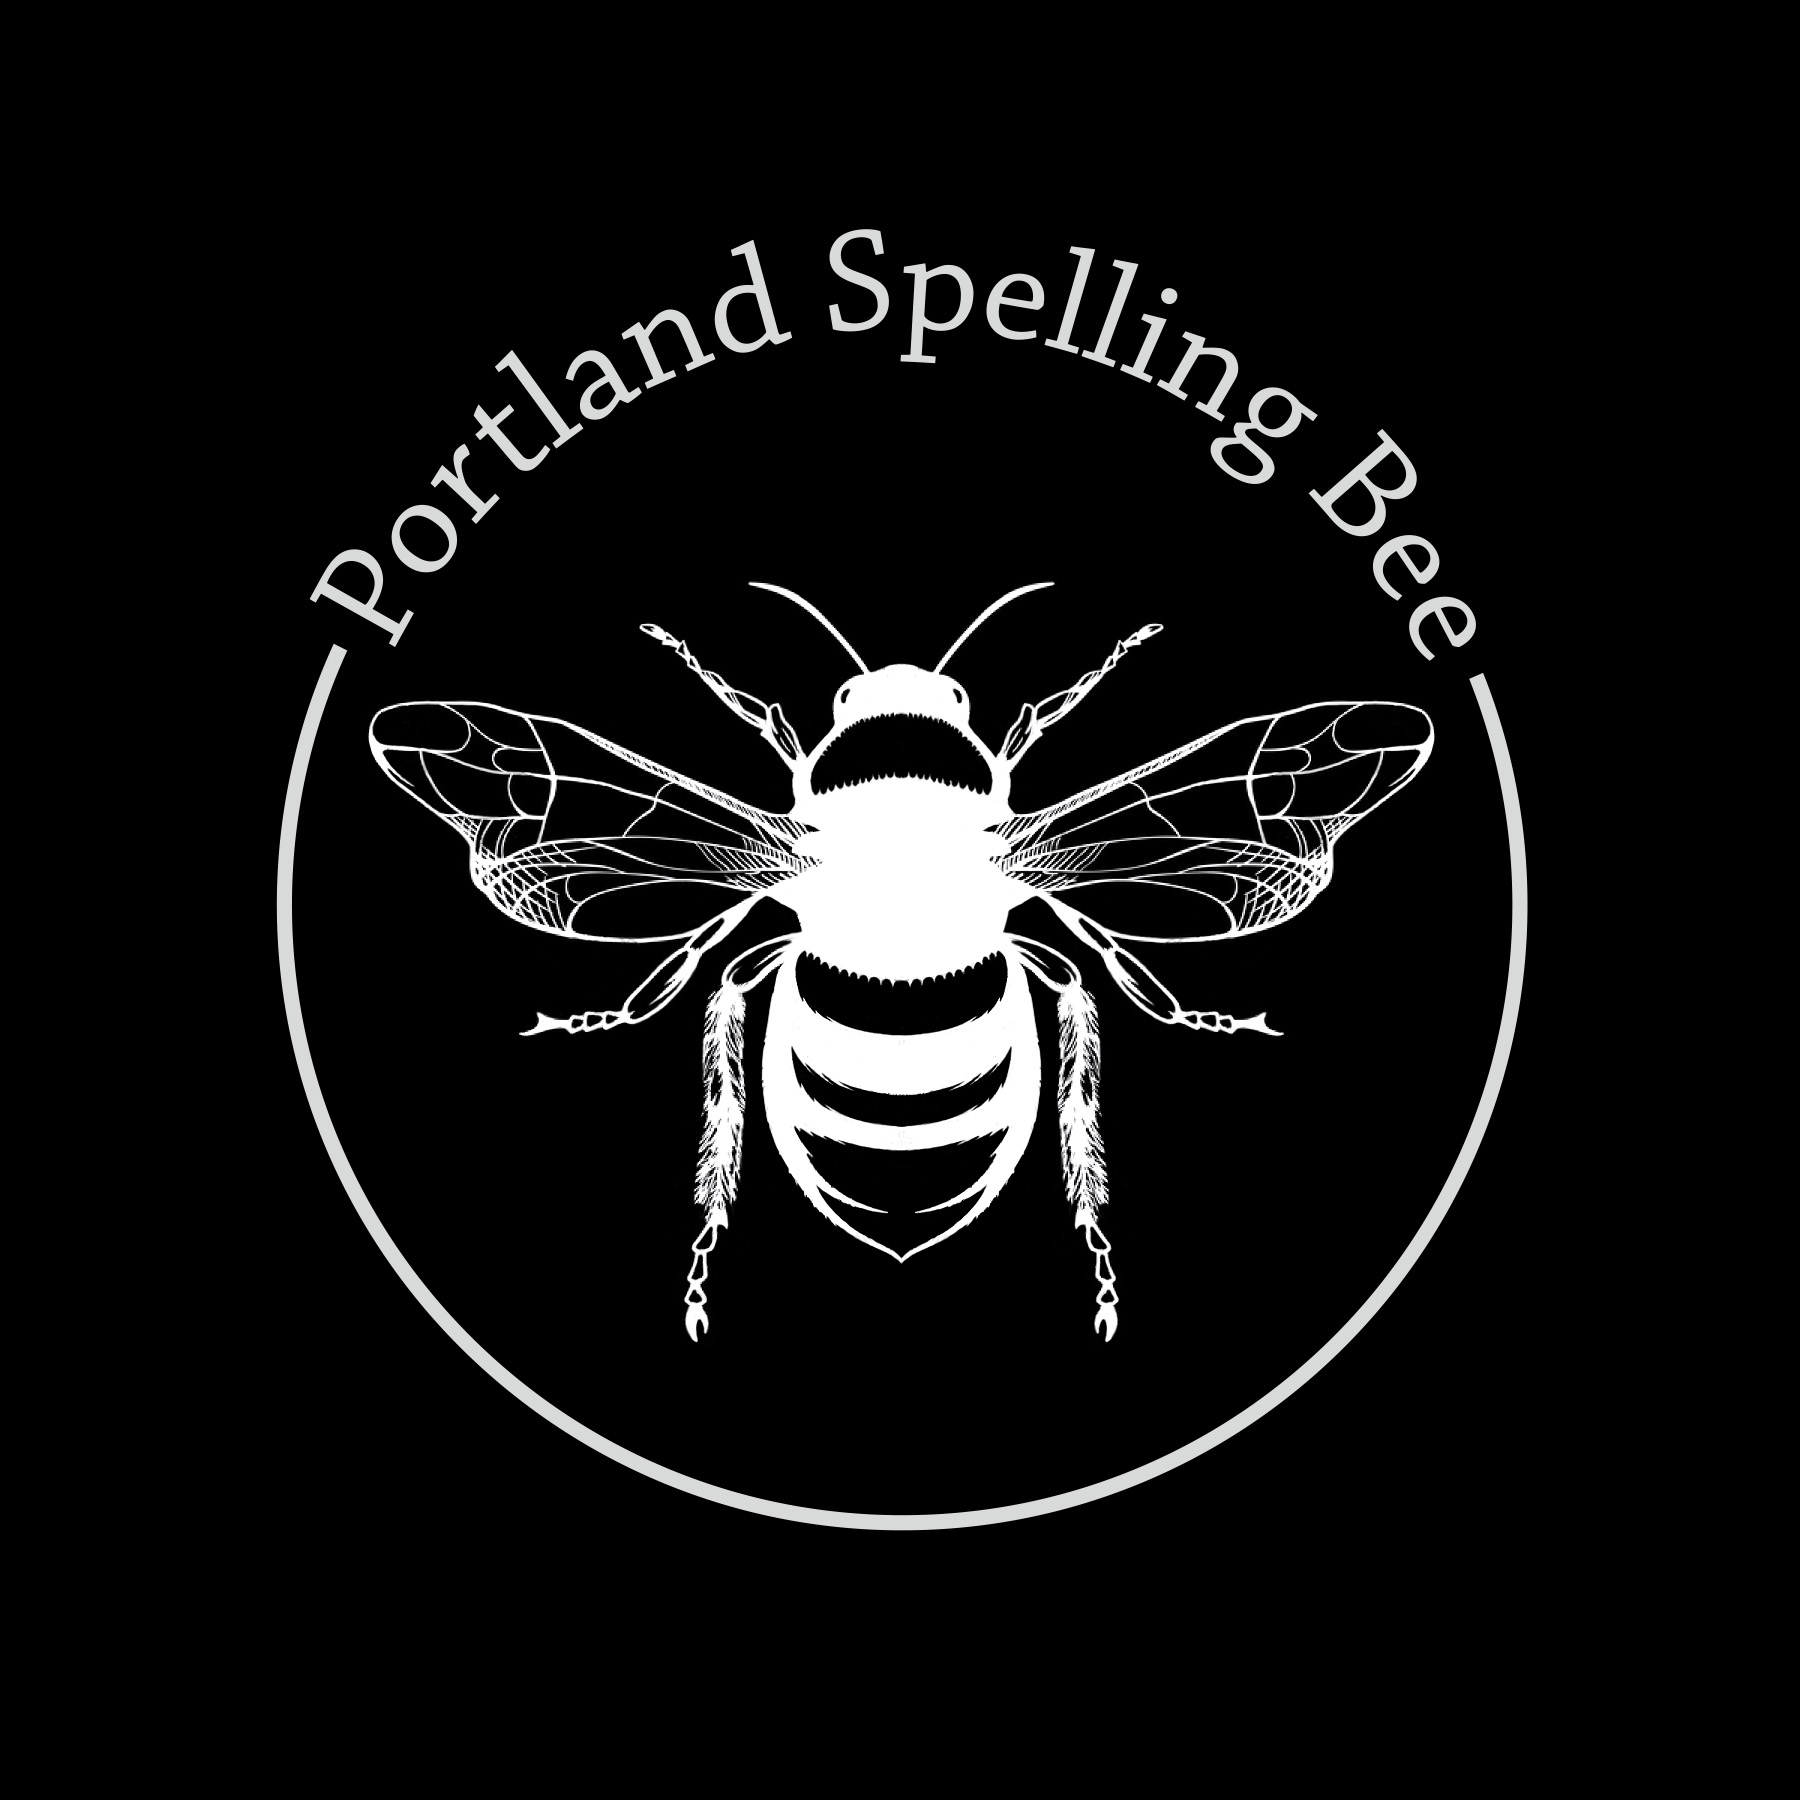 The Portland Spelling Bee